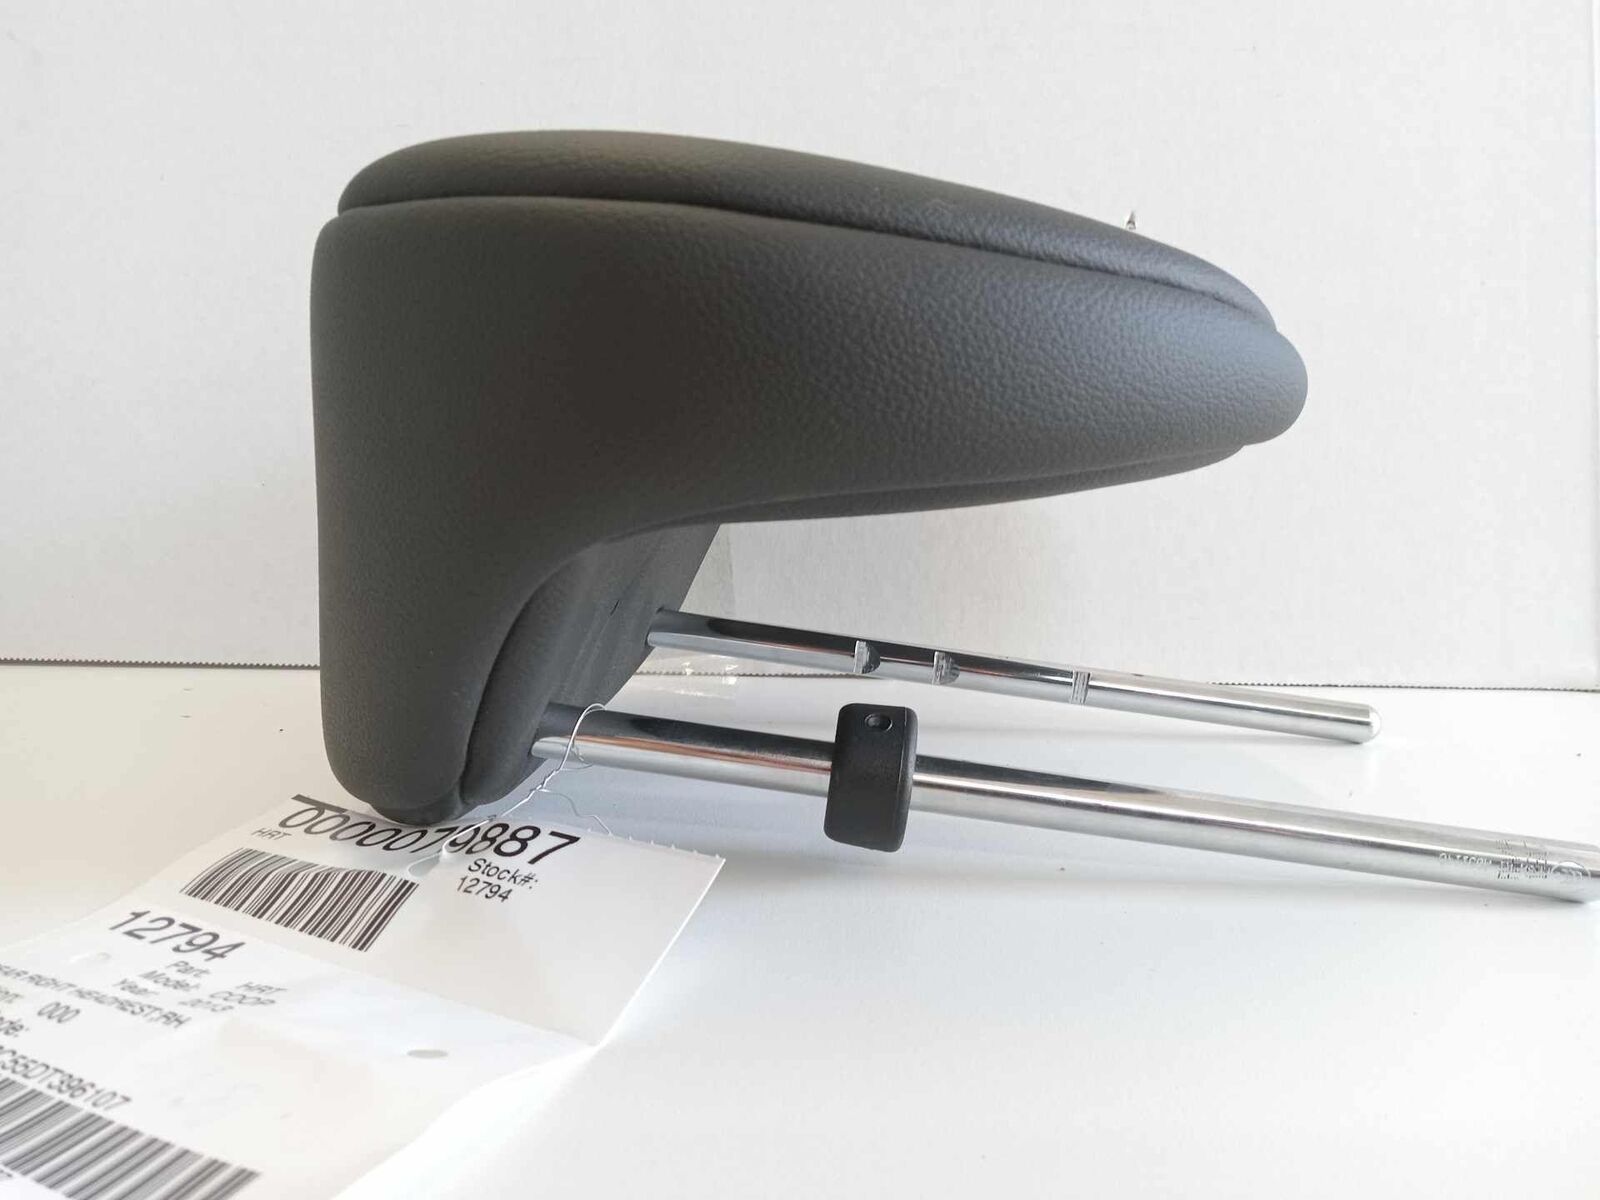 Headrest Head Rest Rear Right Passenger Seat Gray Leather OEM MINI COOPER 2013